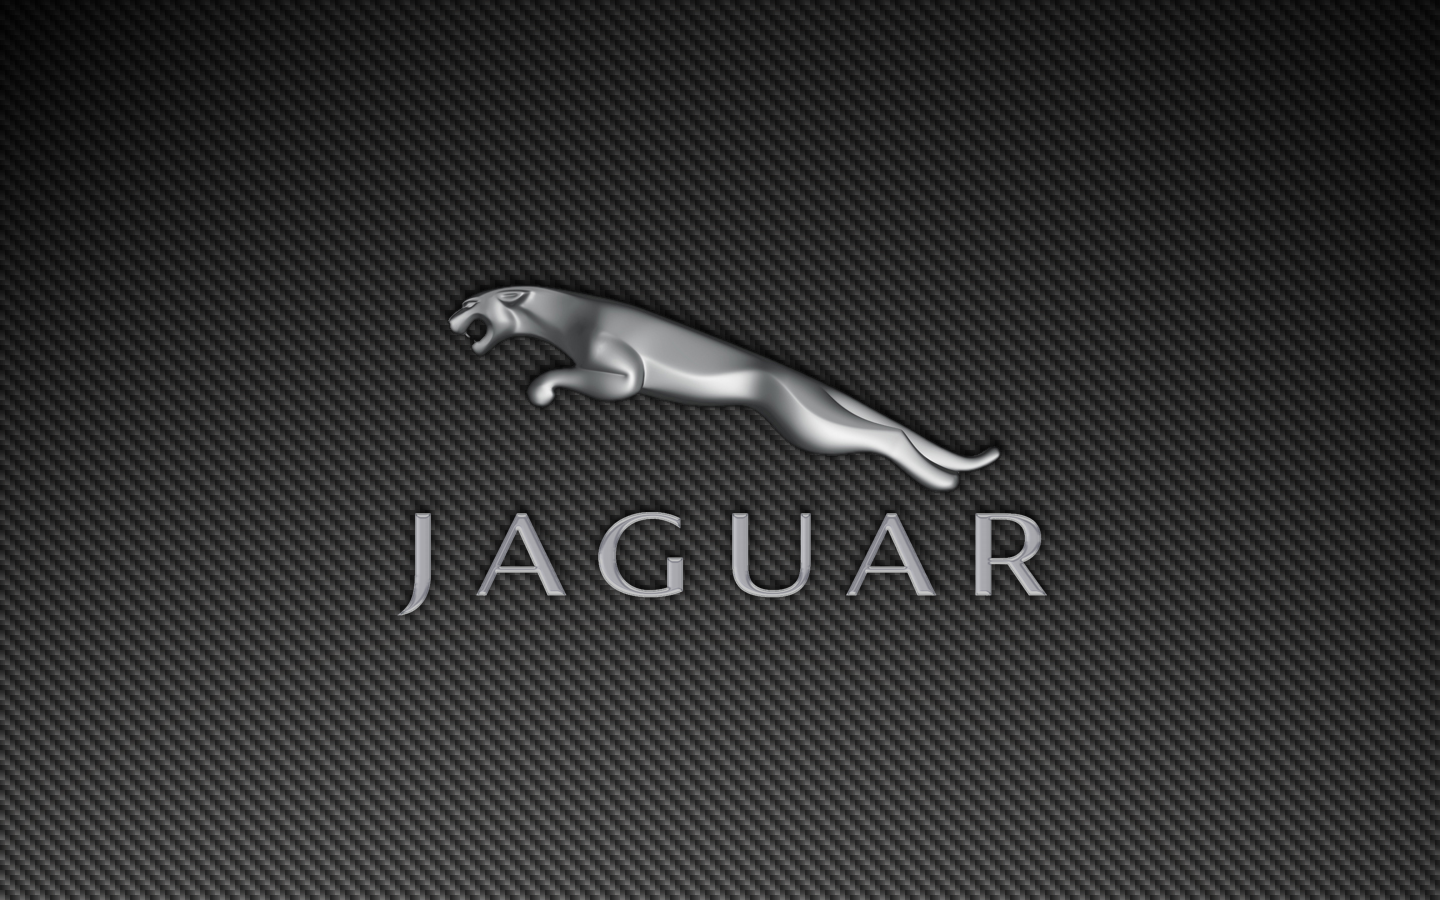 jaguar wallpaper